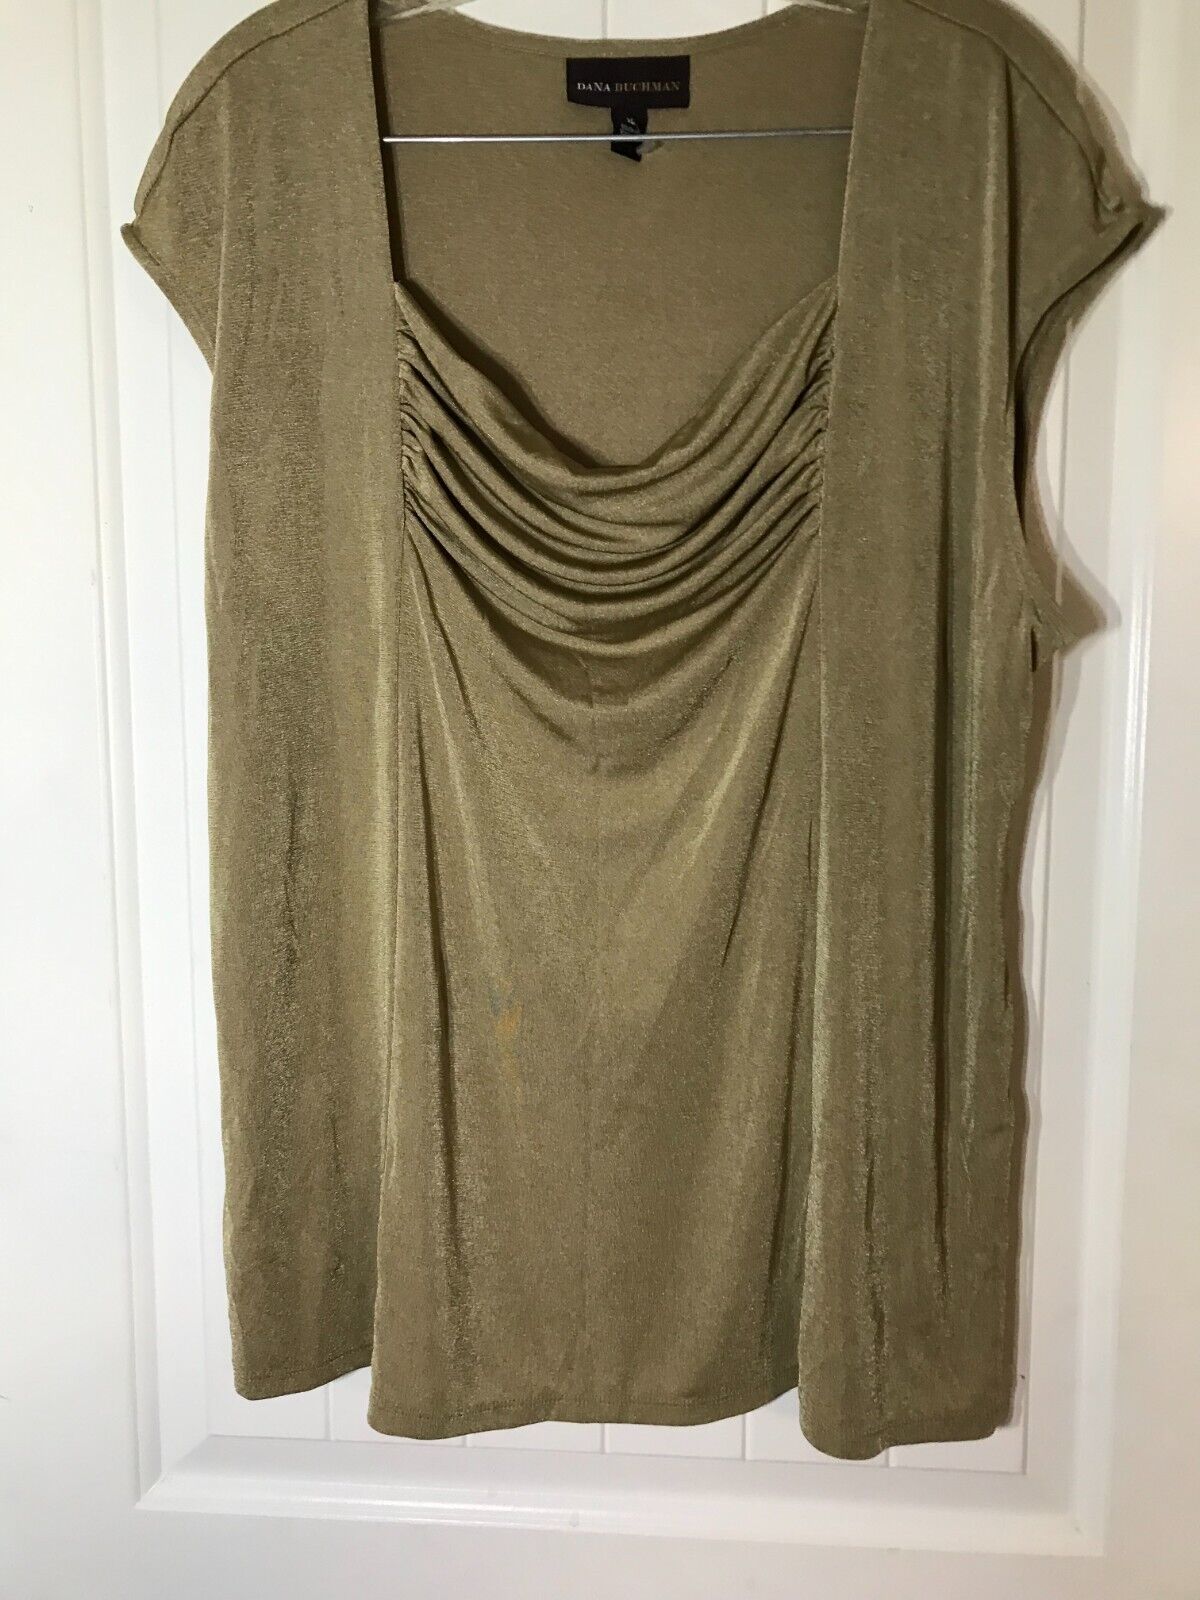 EC! DANA BUCHMAN Sleeveless Pullover Light Gold Slinky Top size XL 